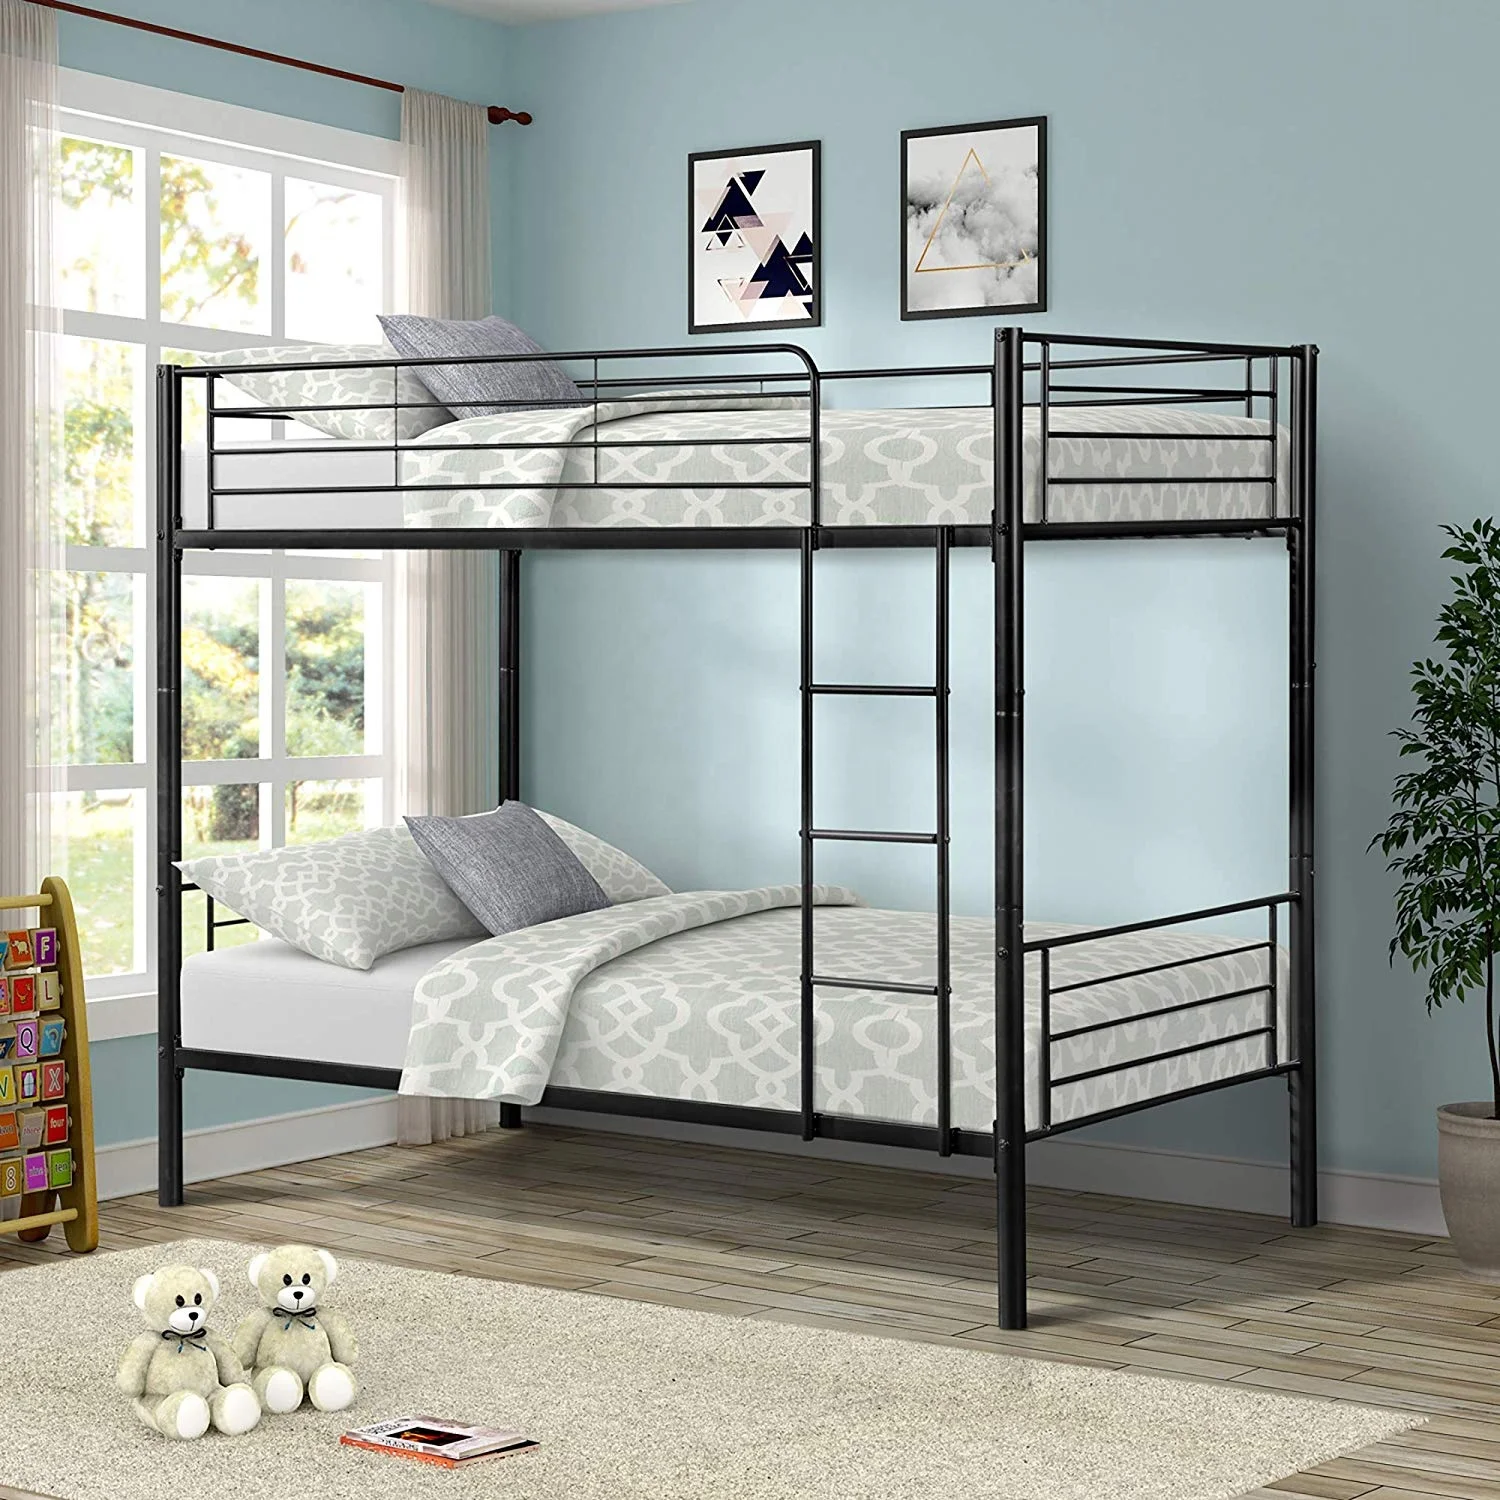 bunk bed designs price